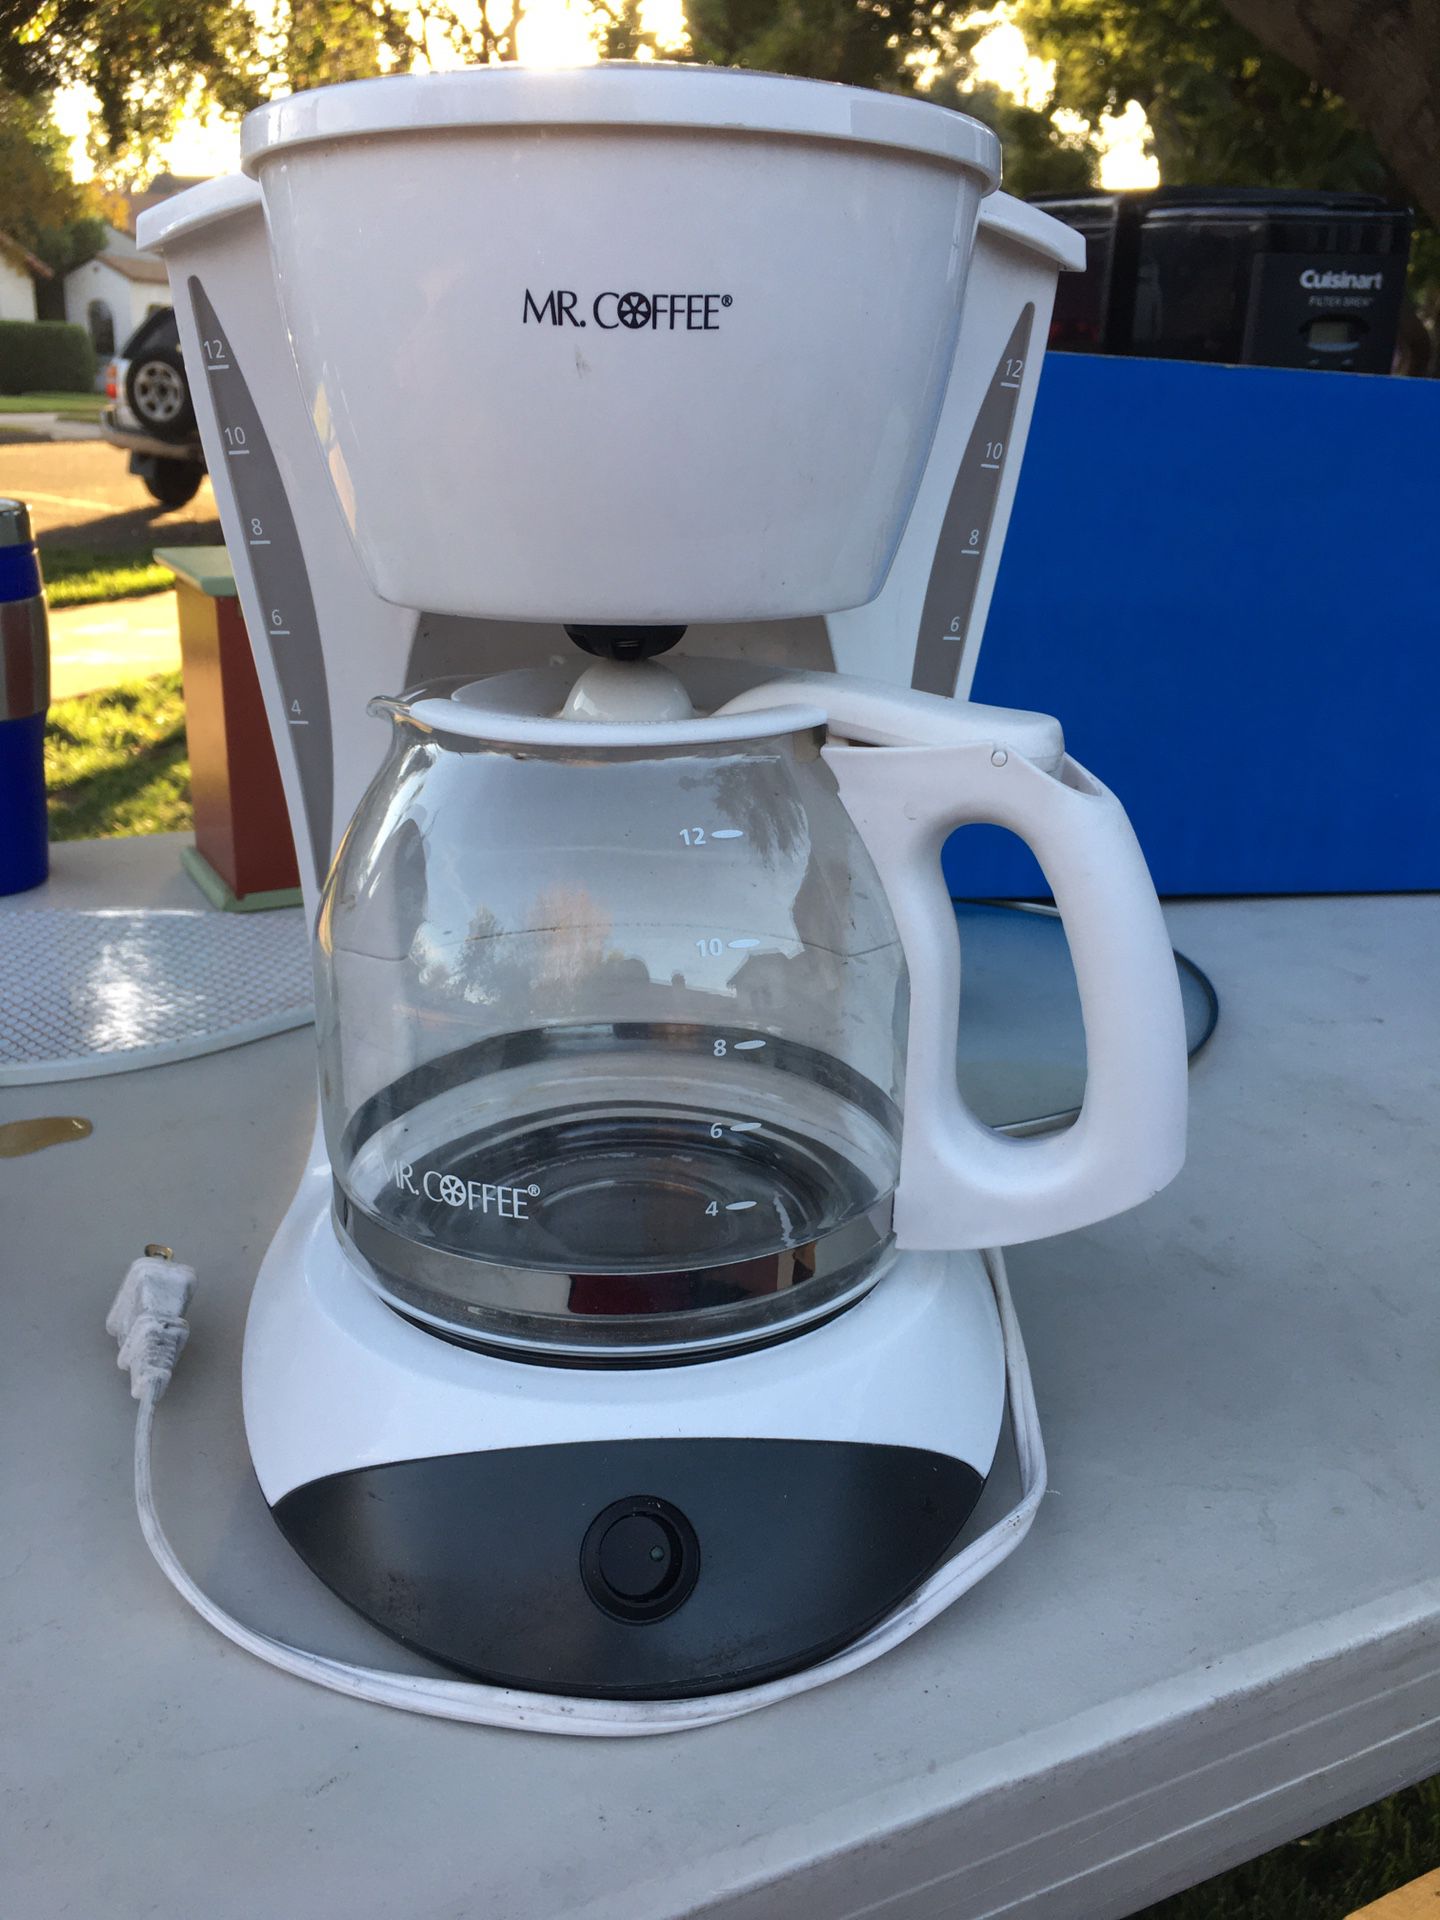 Mr. Coffee 12 cup coffee maker